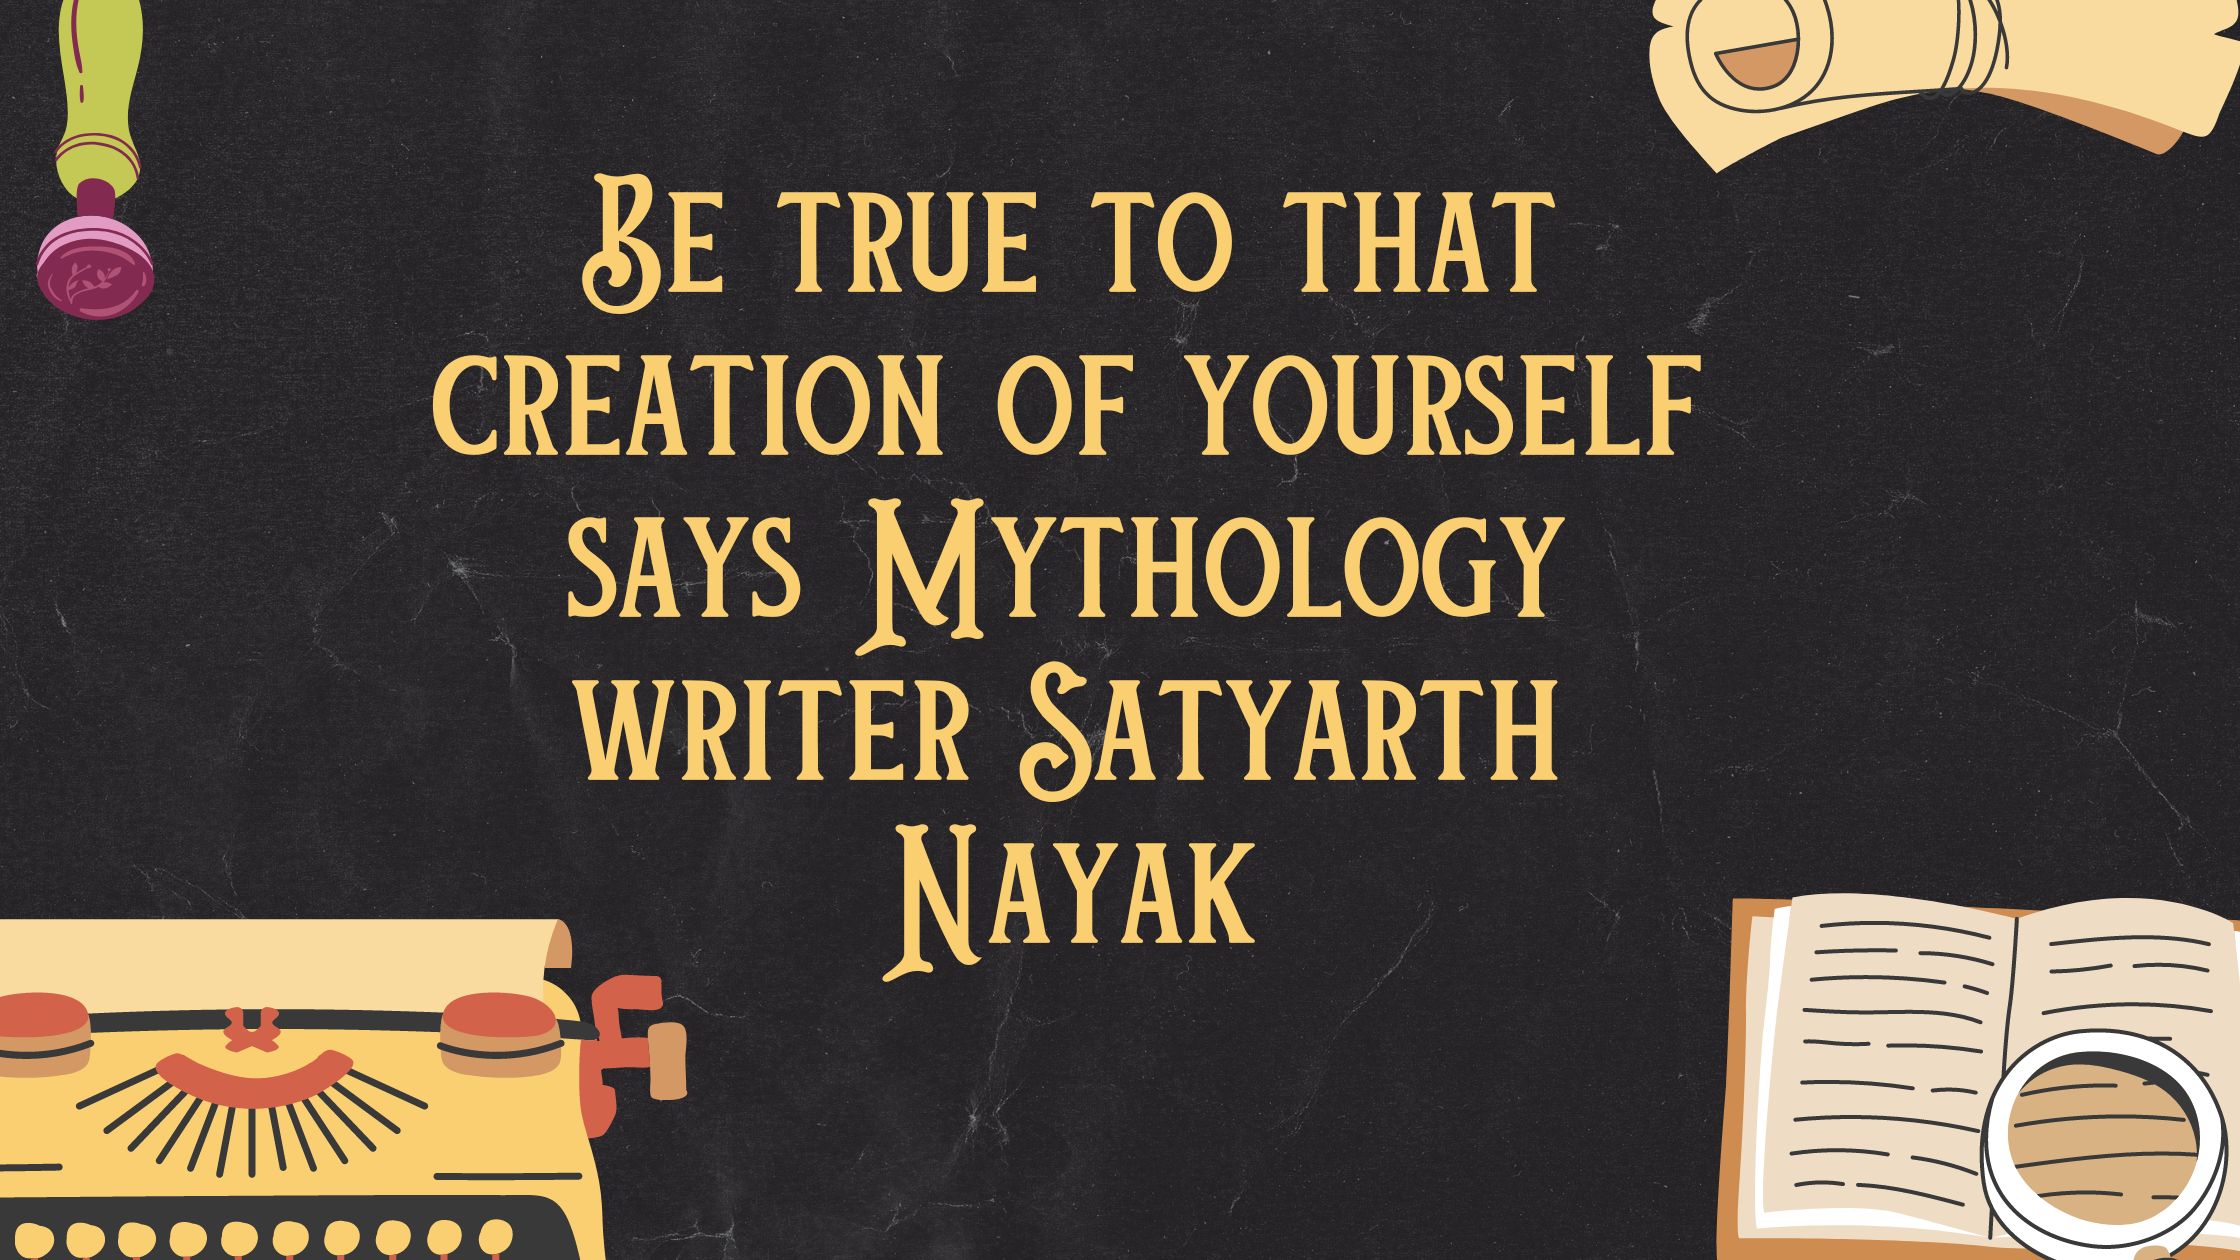 Be true to that creation of yourself says Mythology writer Satyarth Nayak